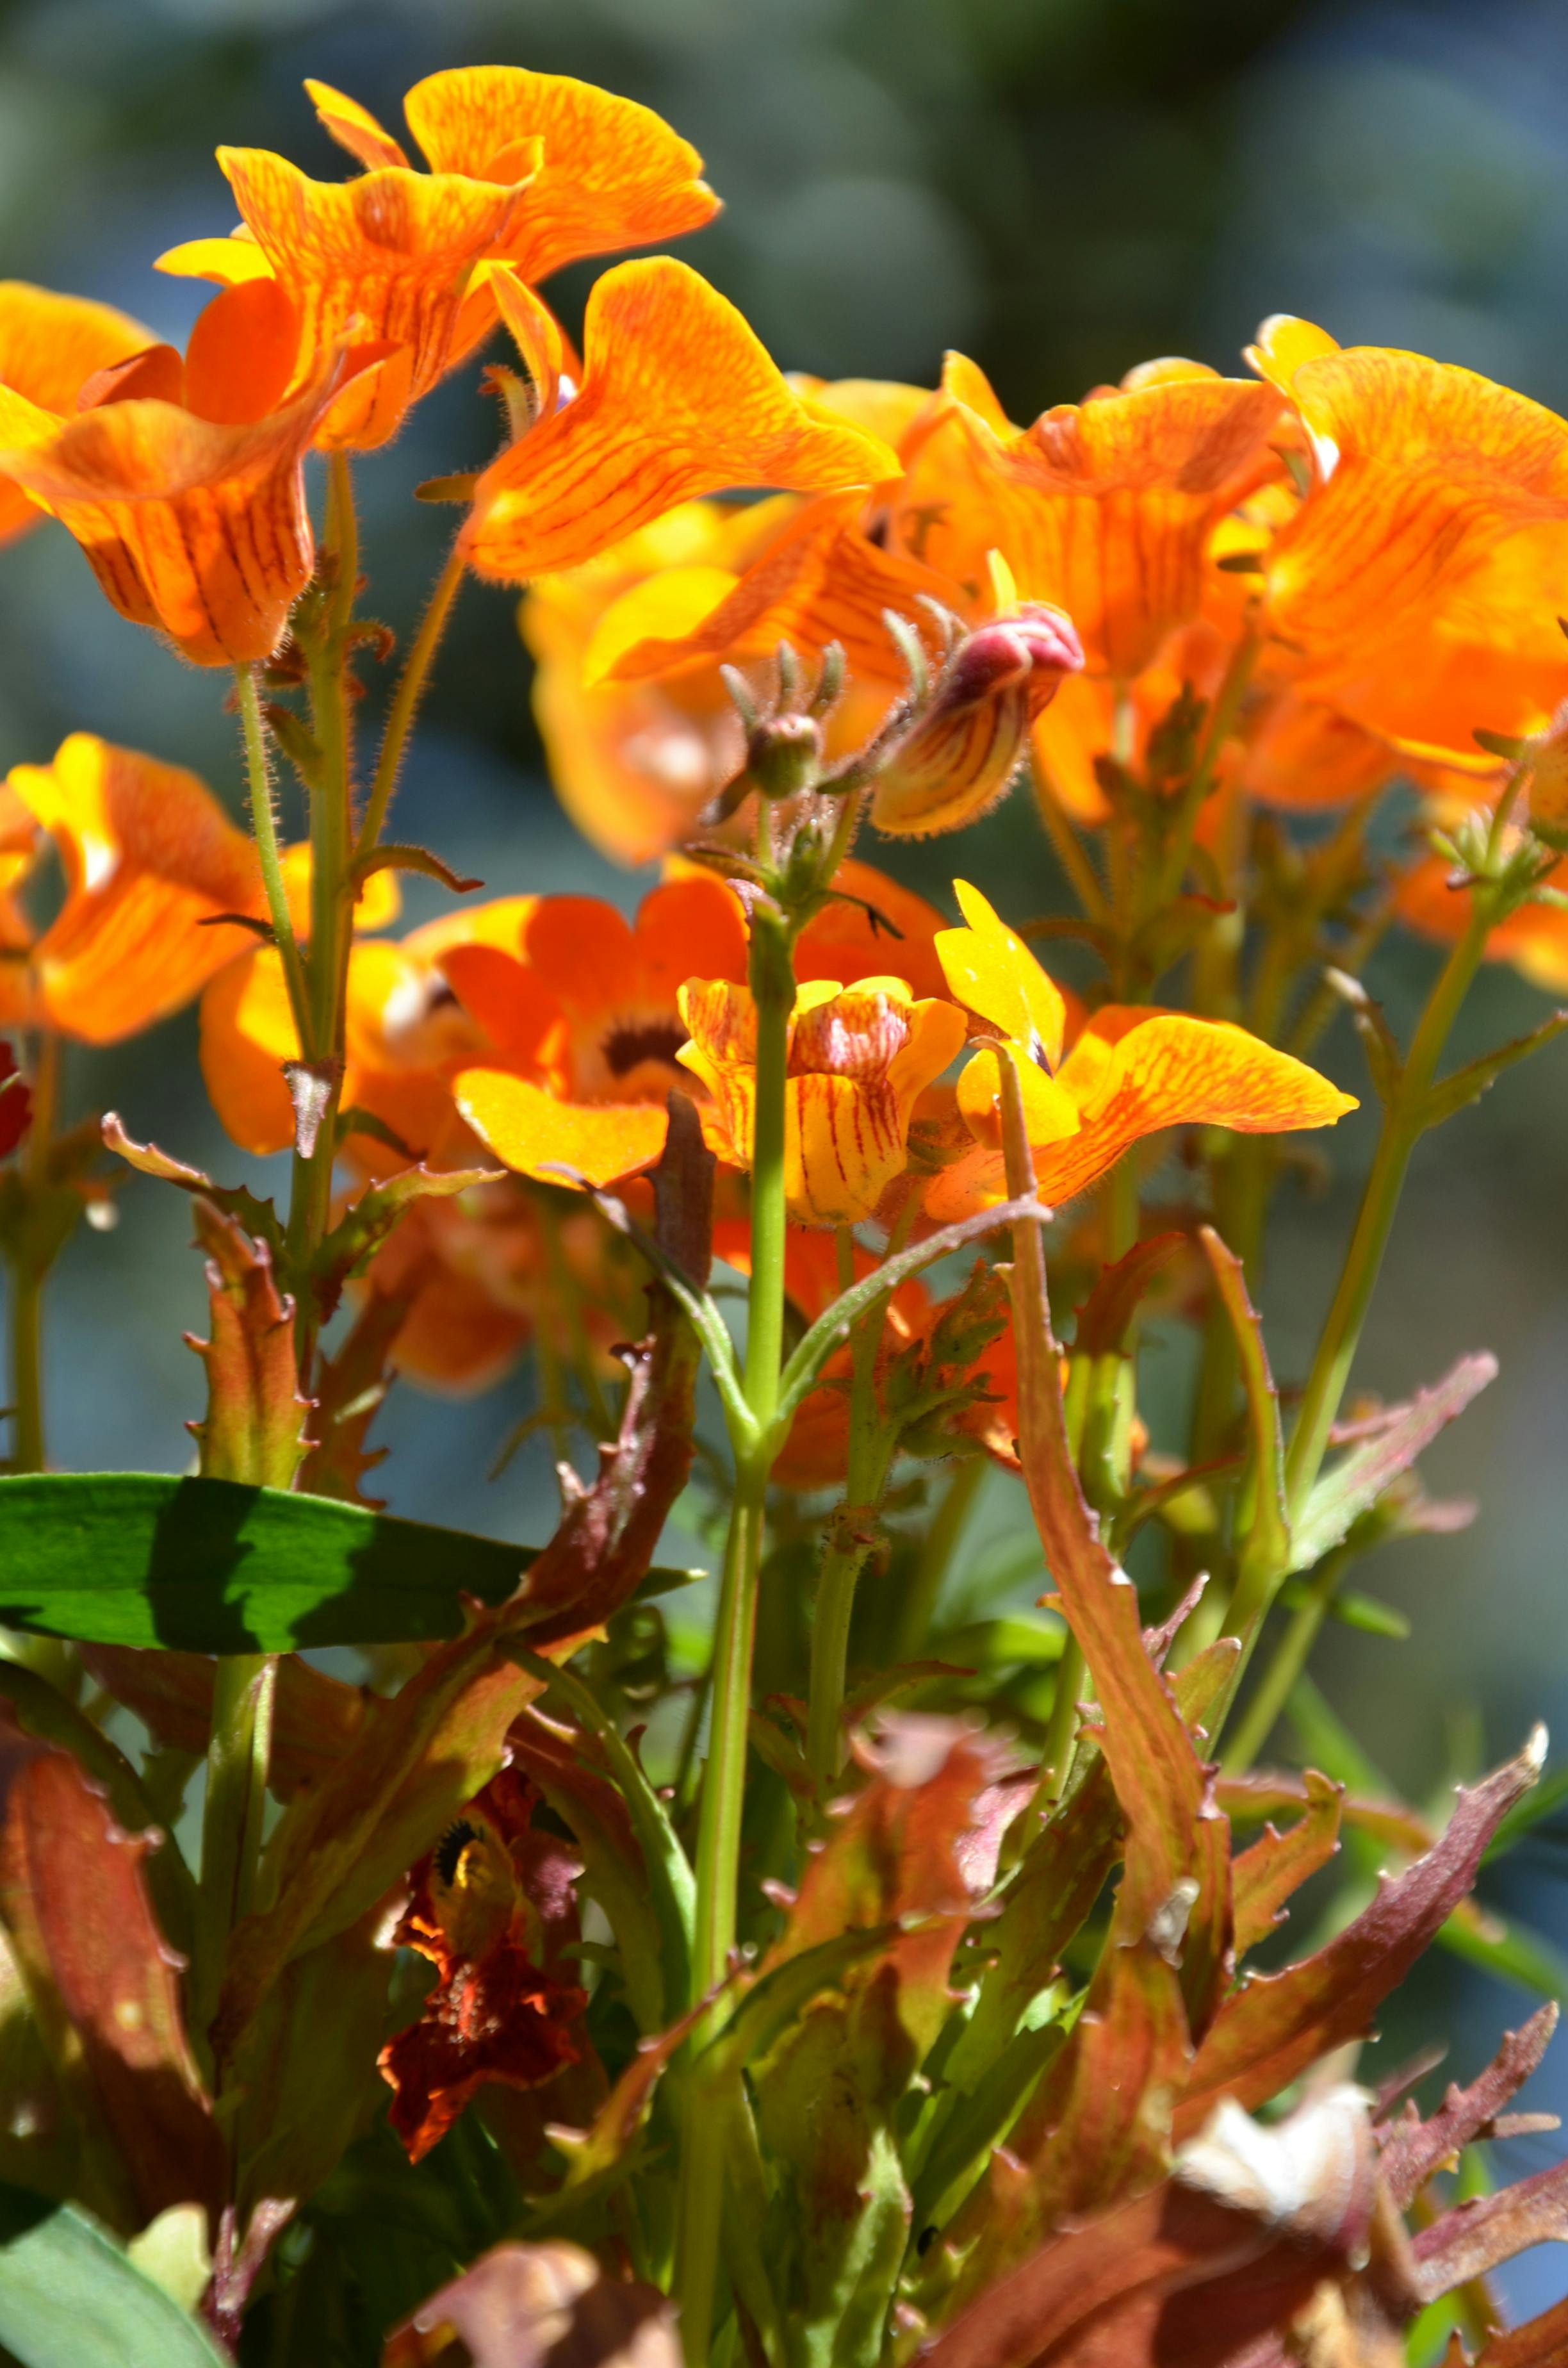 Free stock photo of orange flowers